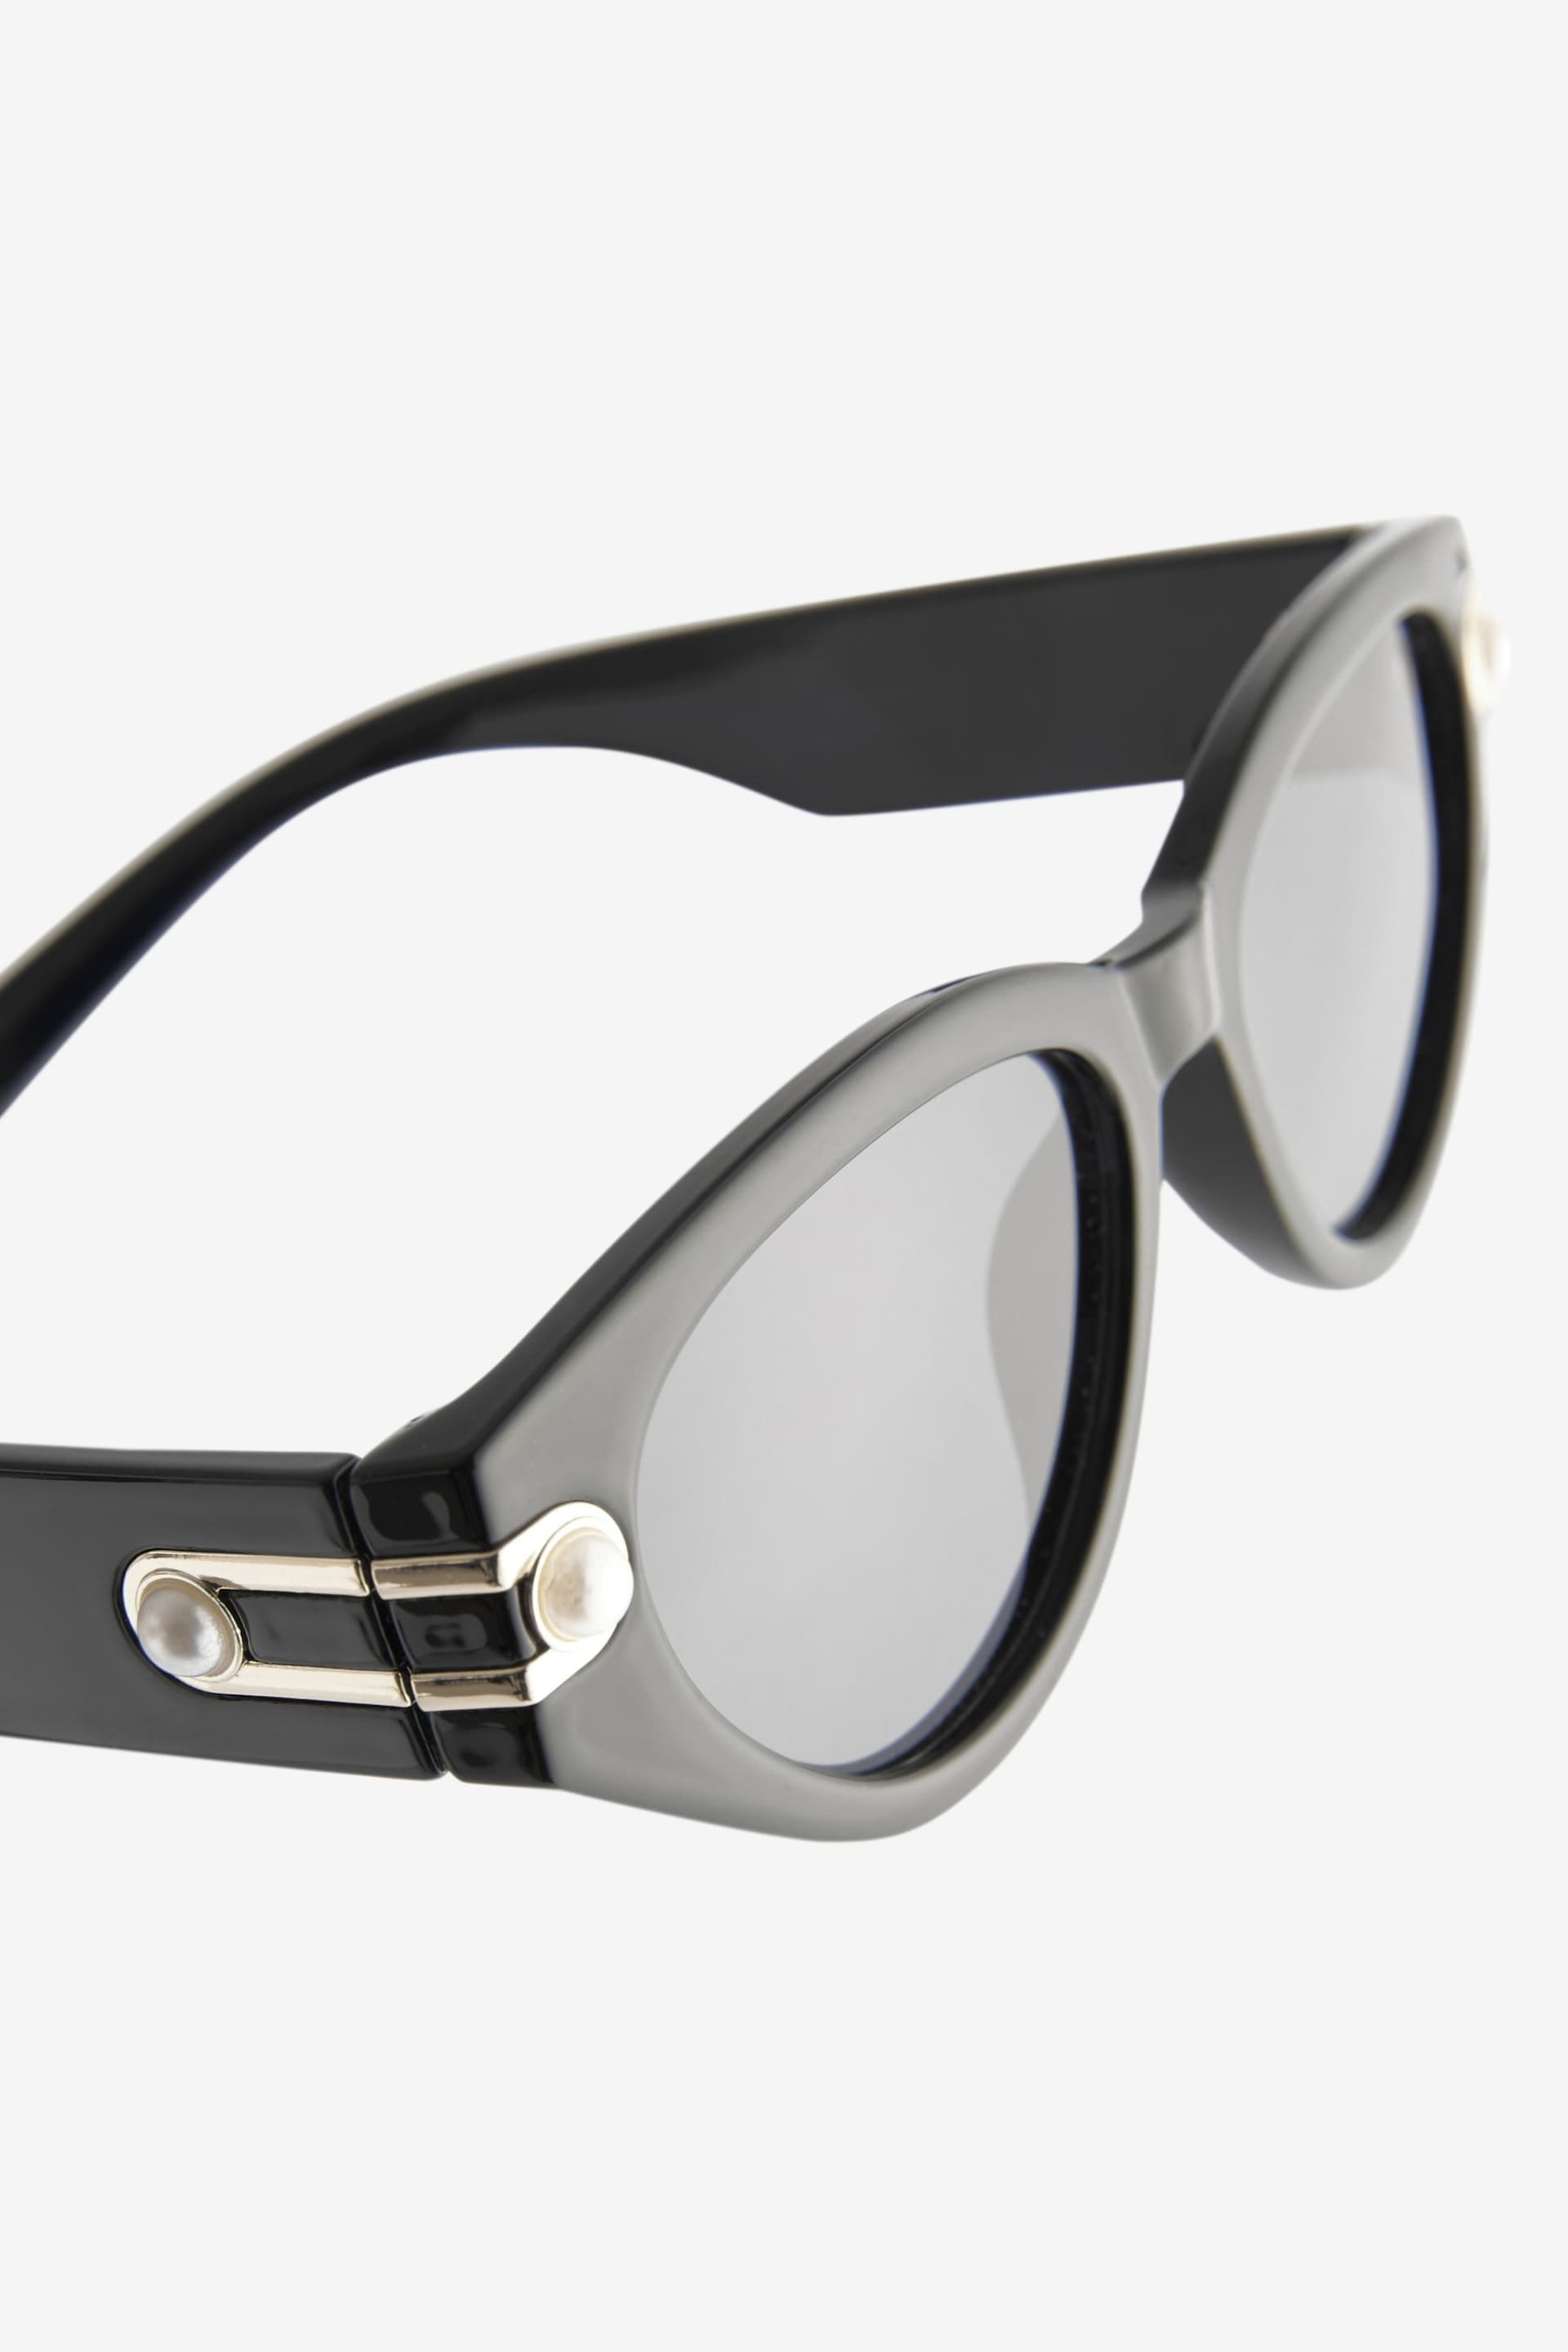 Black Polarized Pearl Cateye Sunglasses - Image 5 of 5